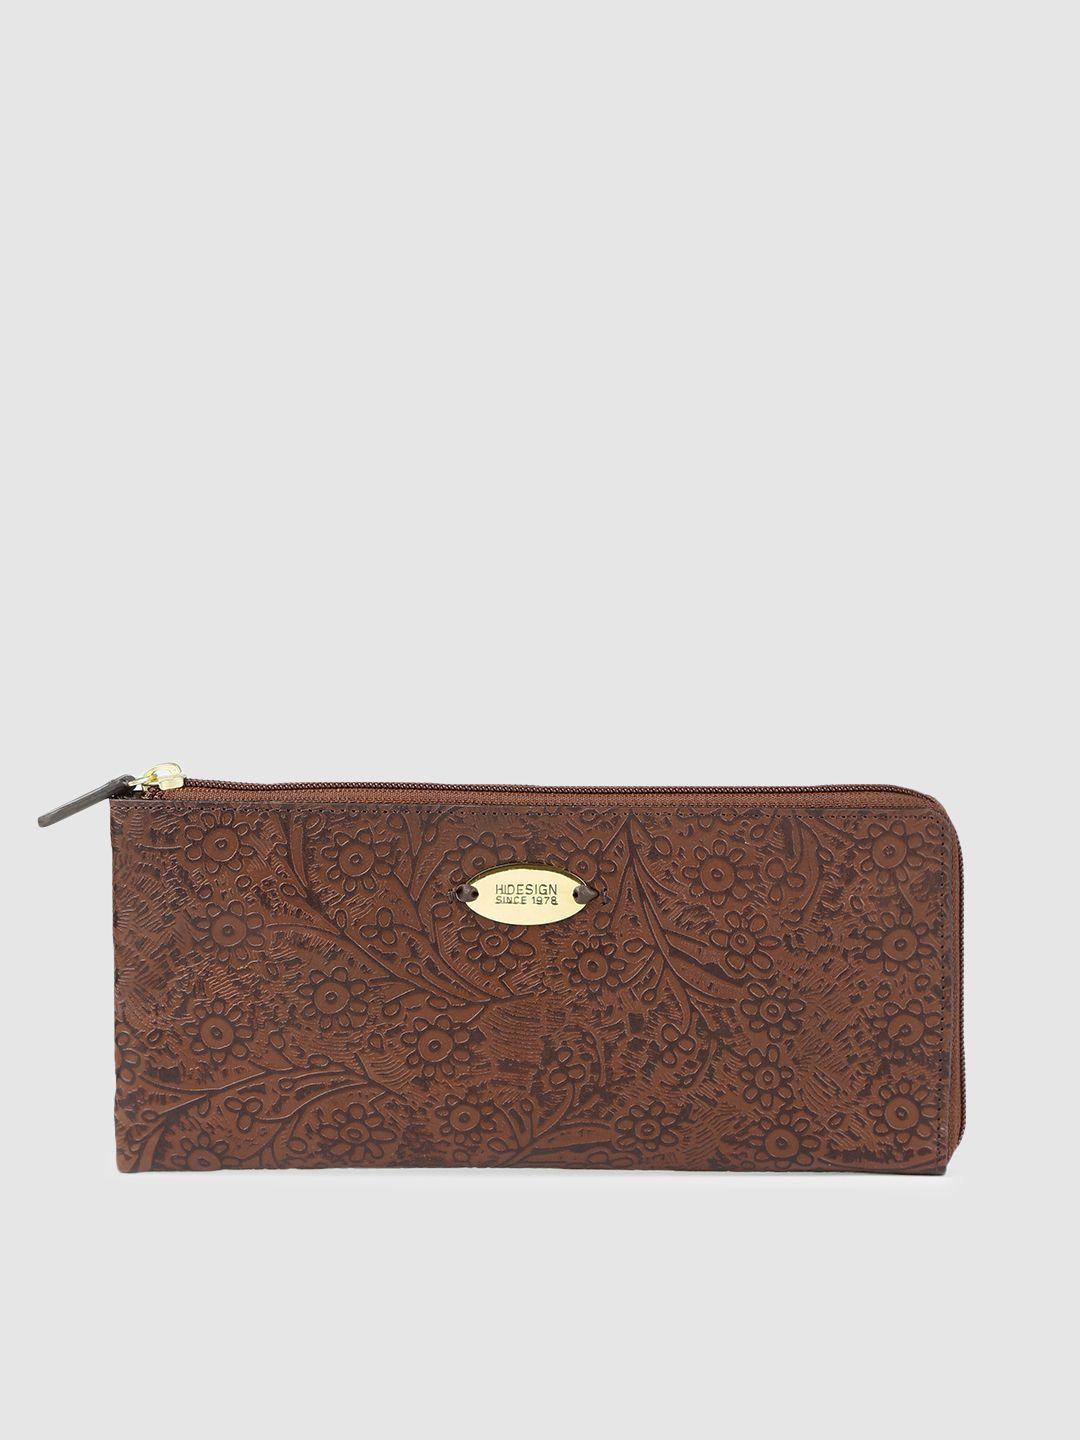 hidesign women tan brown self design zip around leather wallet